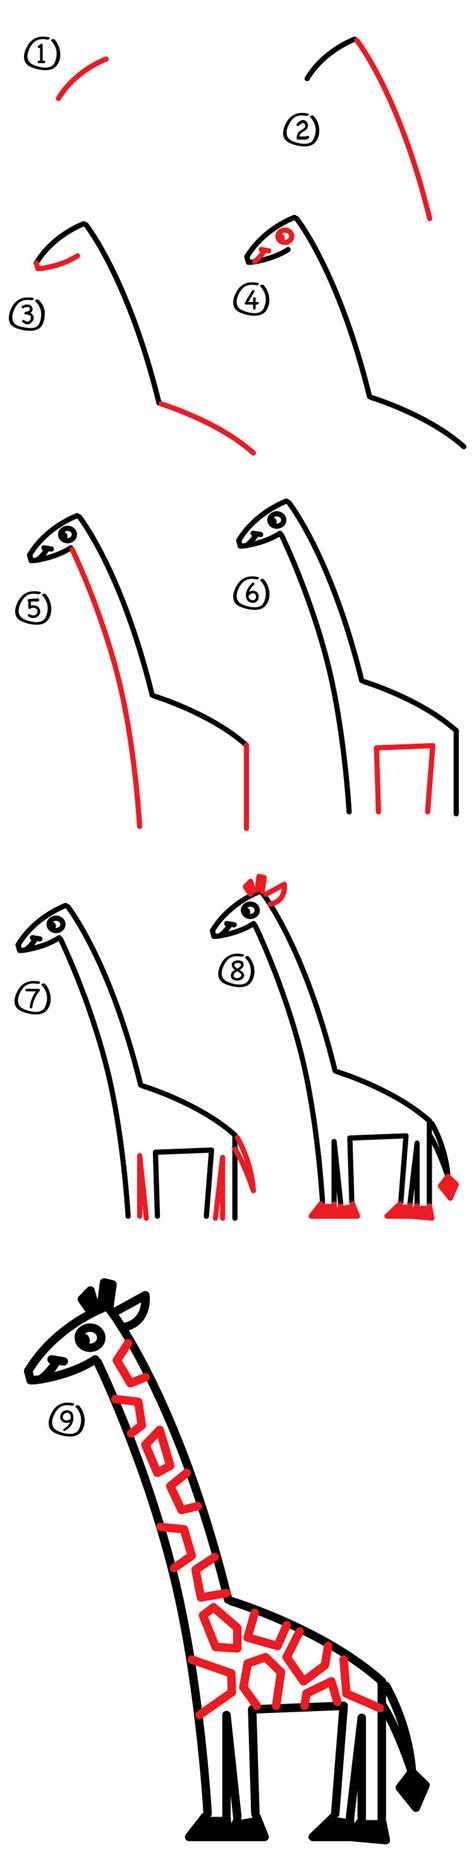 How To Draw A Giraffe Art For Kids Hub